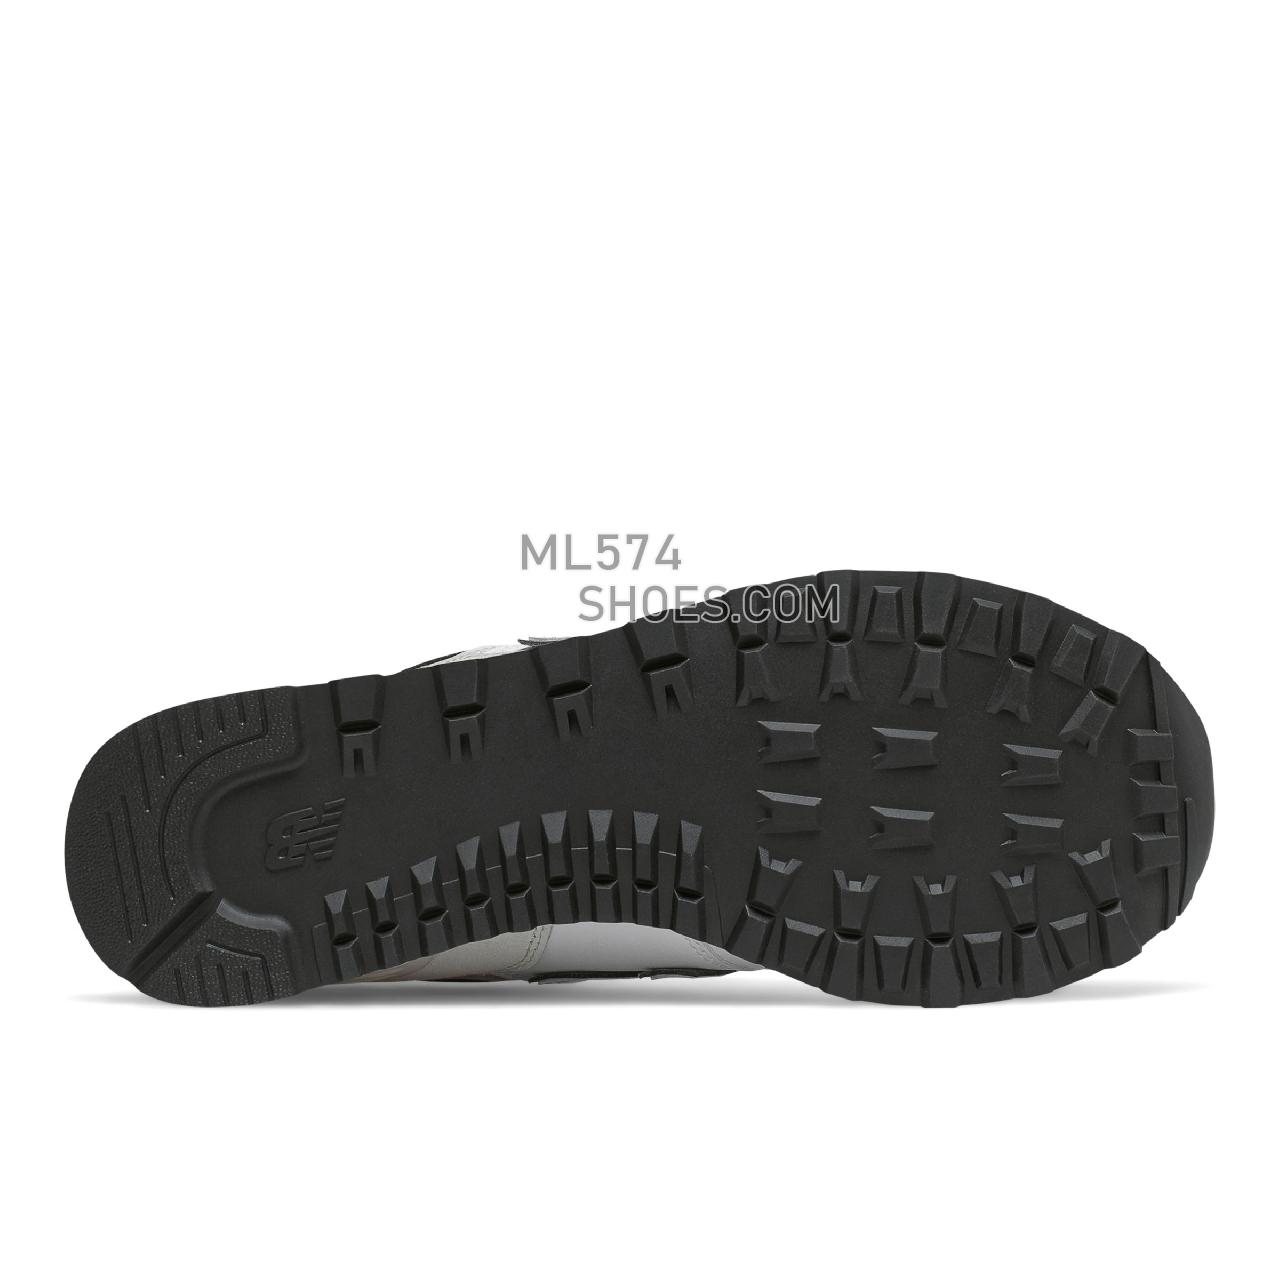 New Balance 574v2 - Men's Classic Sneakers - White with Black - ML574WA2